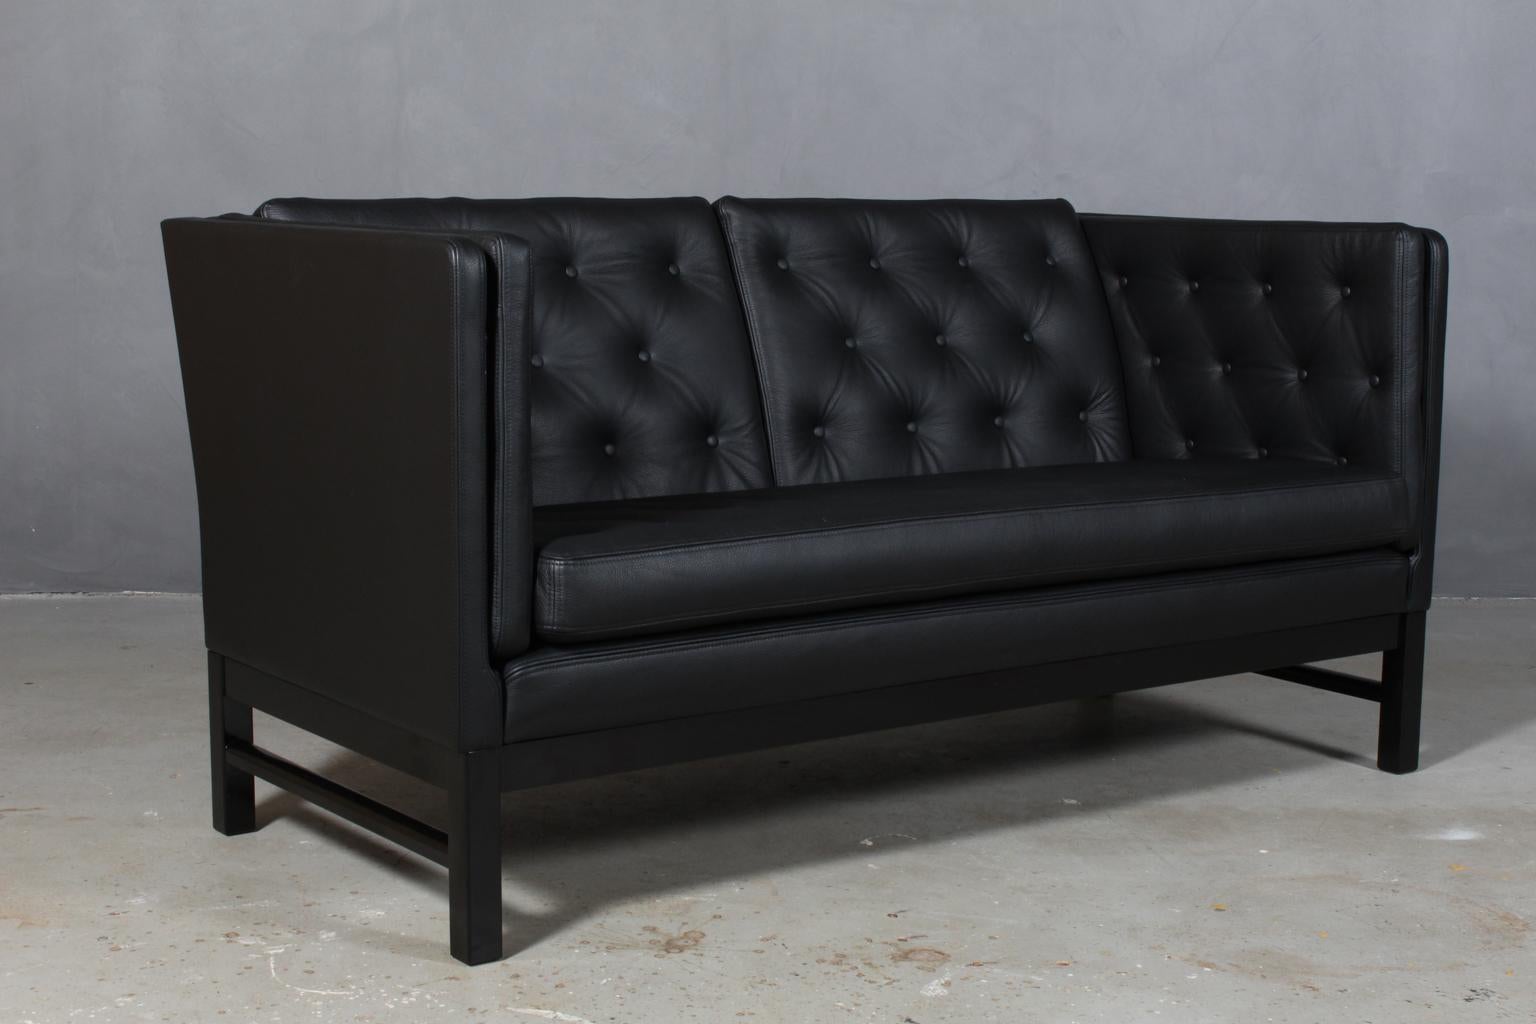 Erik Jørgensen two-seat sofa, new upholstered with black leather. 

Base in black laquered wood.

Model 315 / 2, made by Erik Jørgensen.